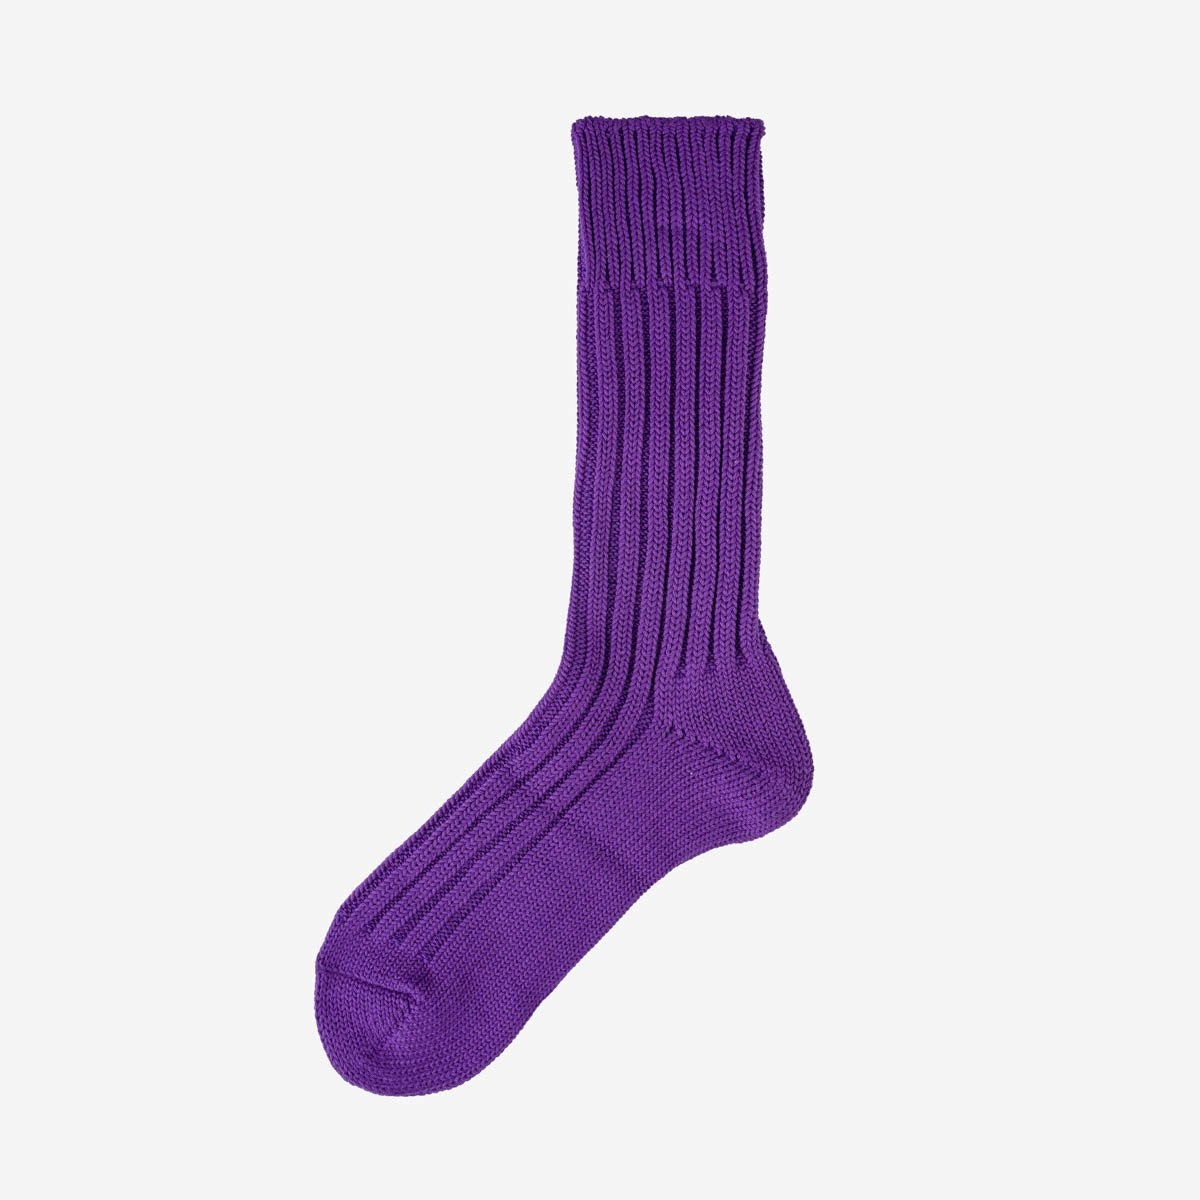 DEC-CAS-PUR Decka Cased Heavyweight Plain Socks - Purple - 3